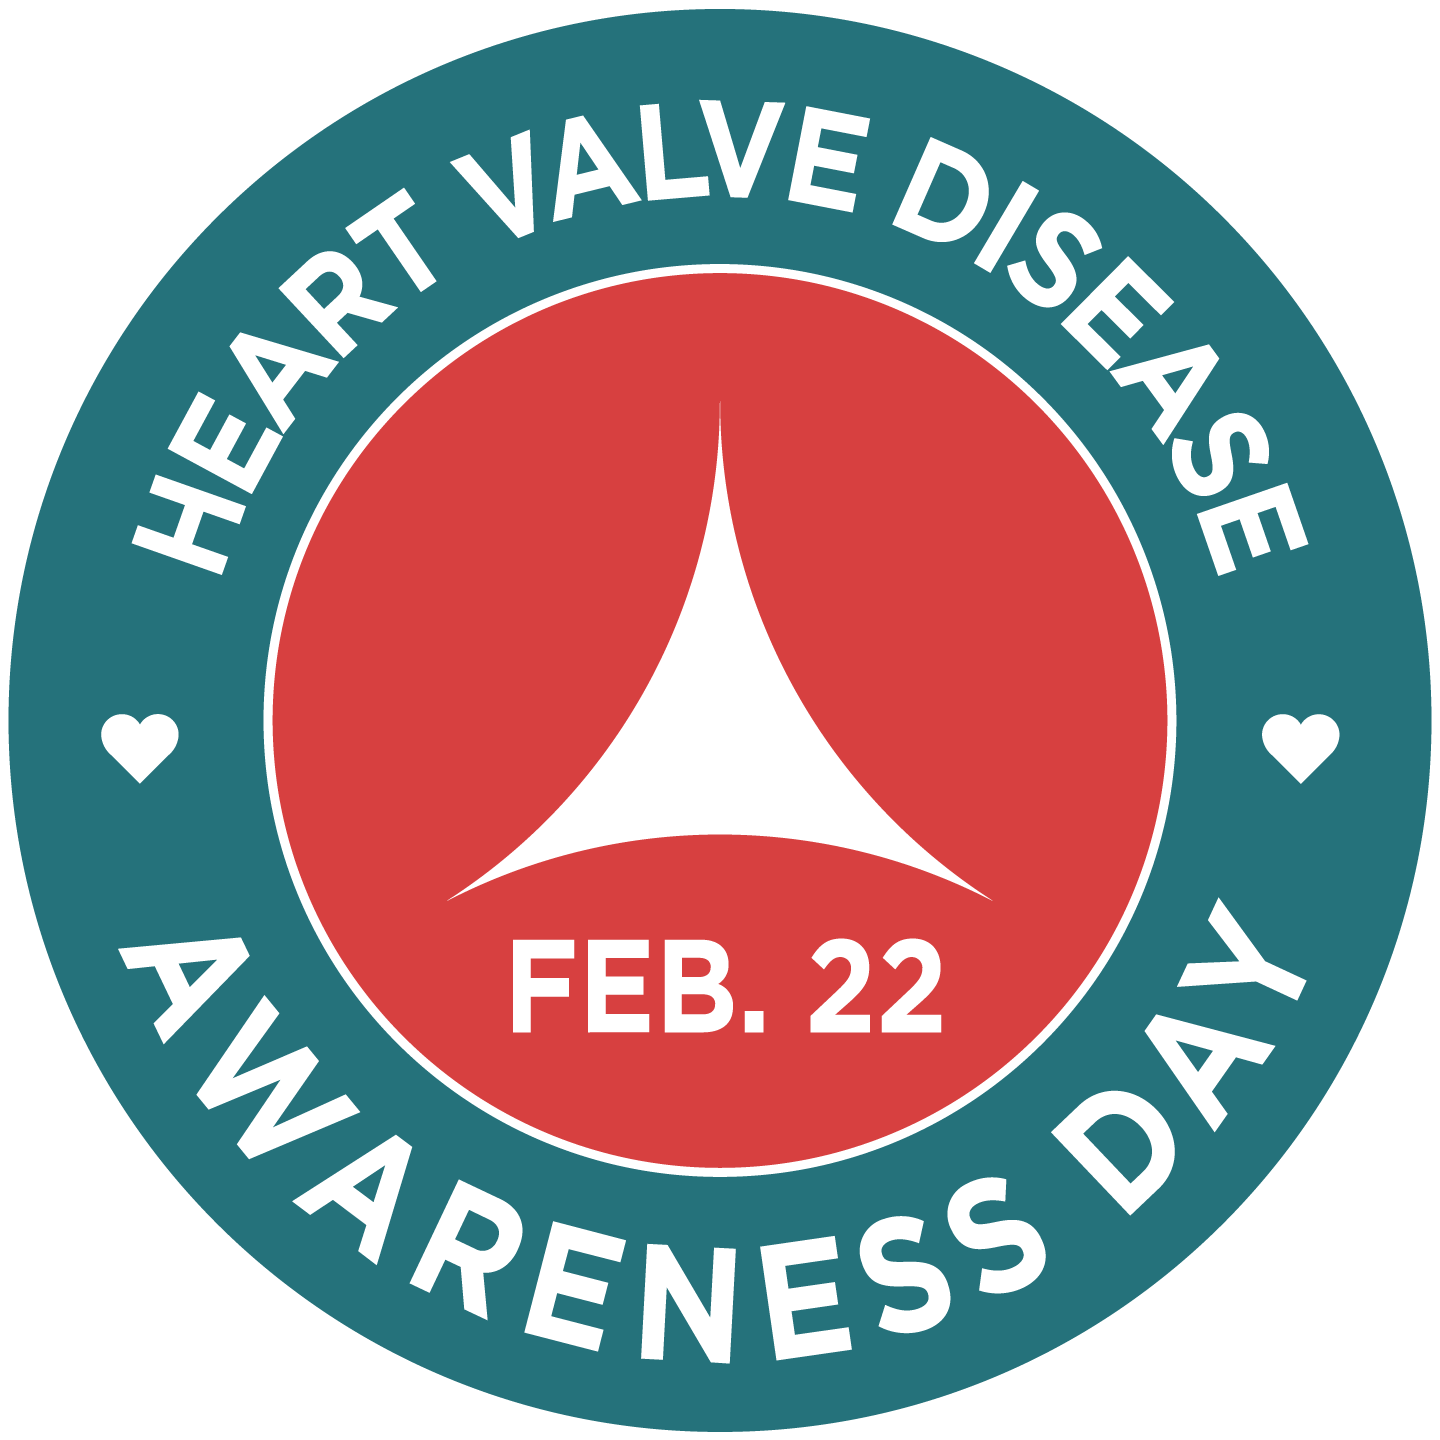 Feb 22 is Heart Valve Disease Awareness Day logo